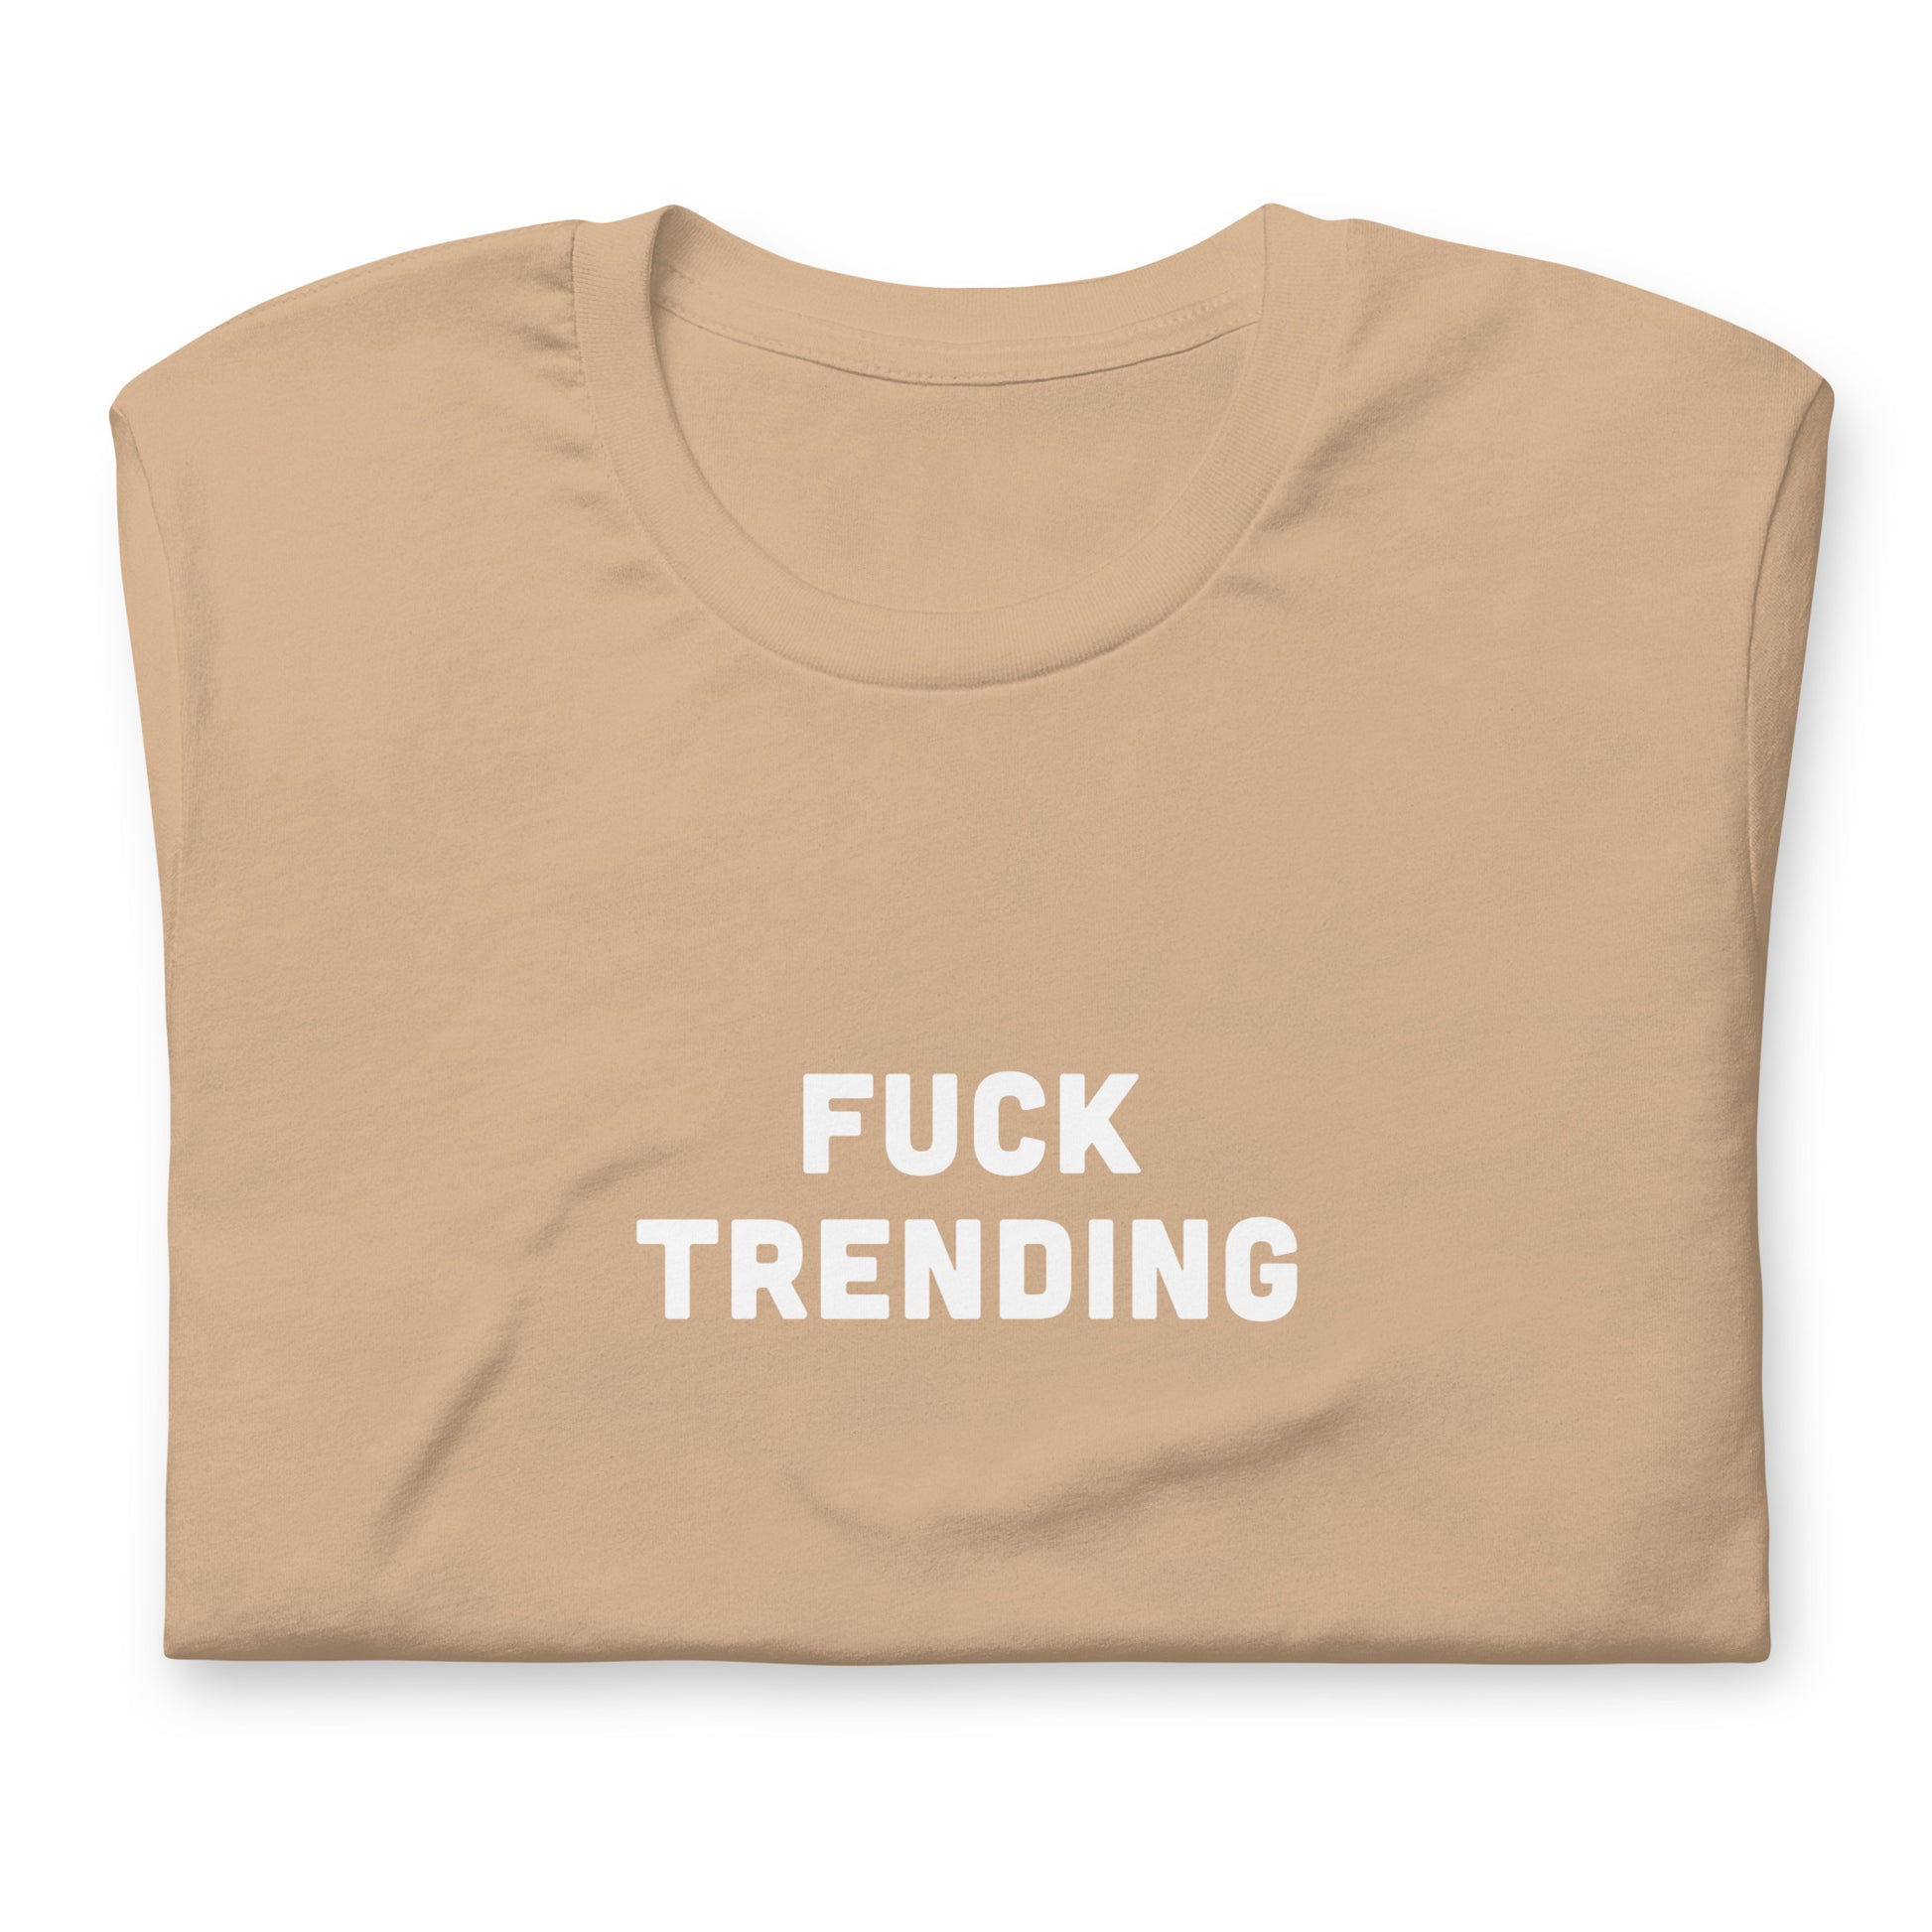 Fuck Trending T-Shirt Size XL Color Forest